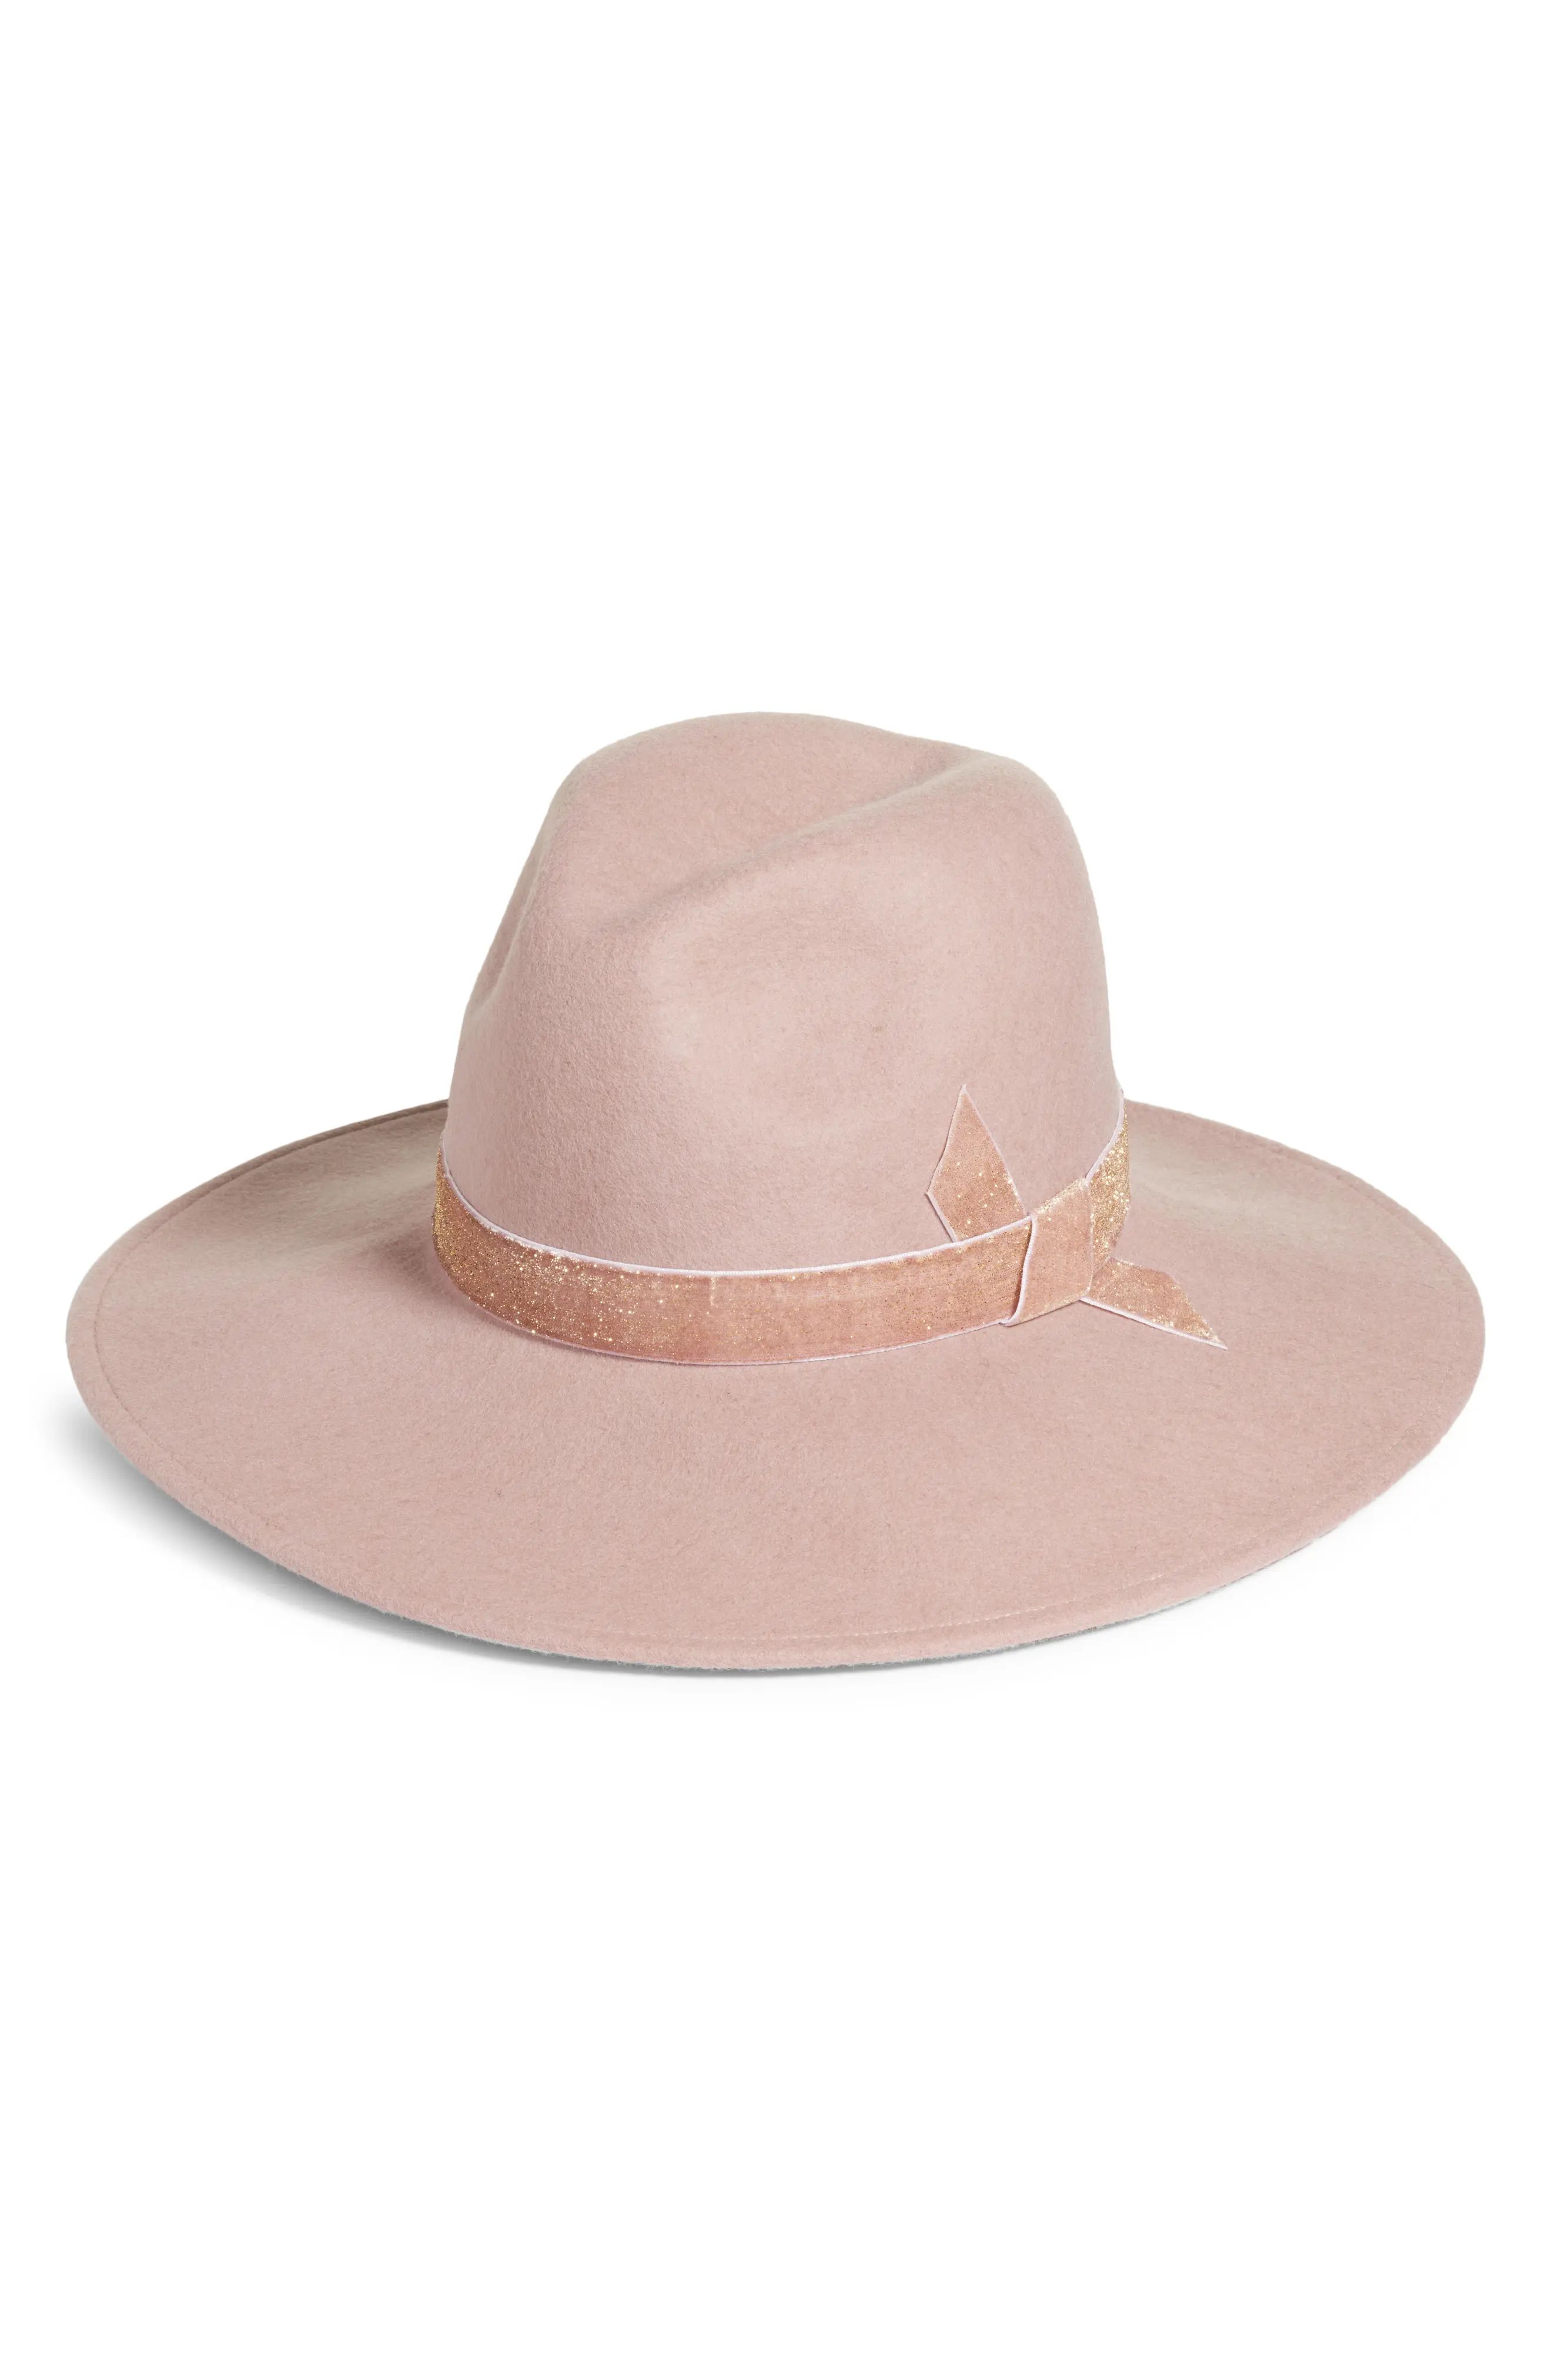 Nordstrom Velvet Trim Wool Panama Hat in Tea Rose at Nordstrom | Nordstrom